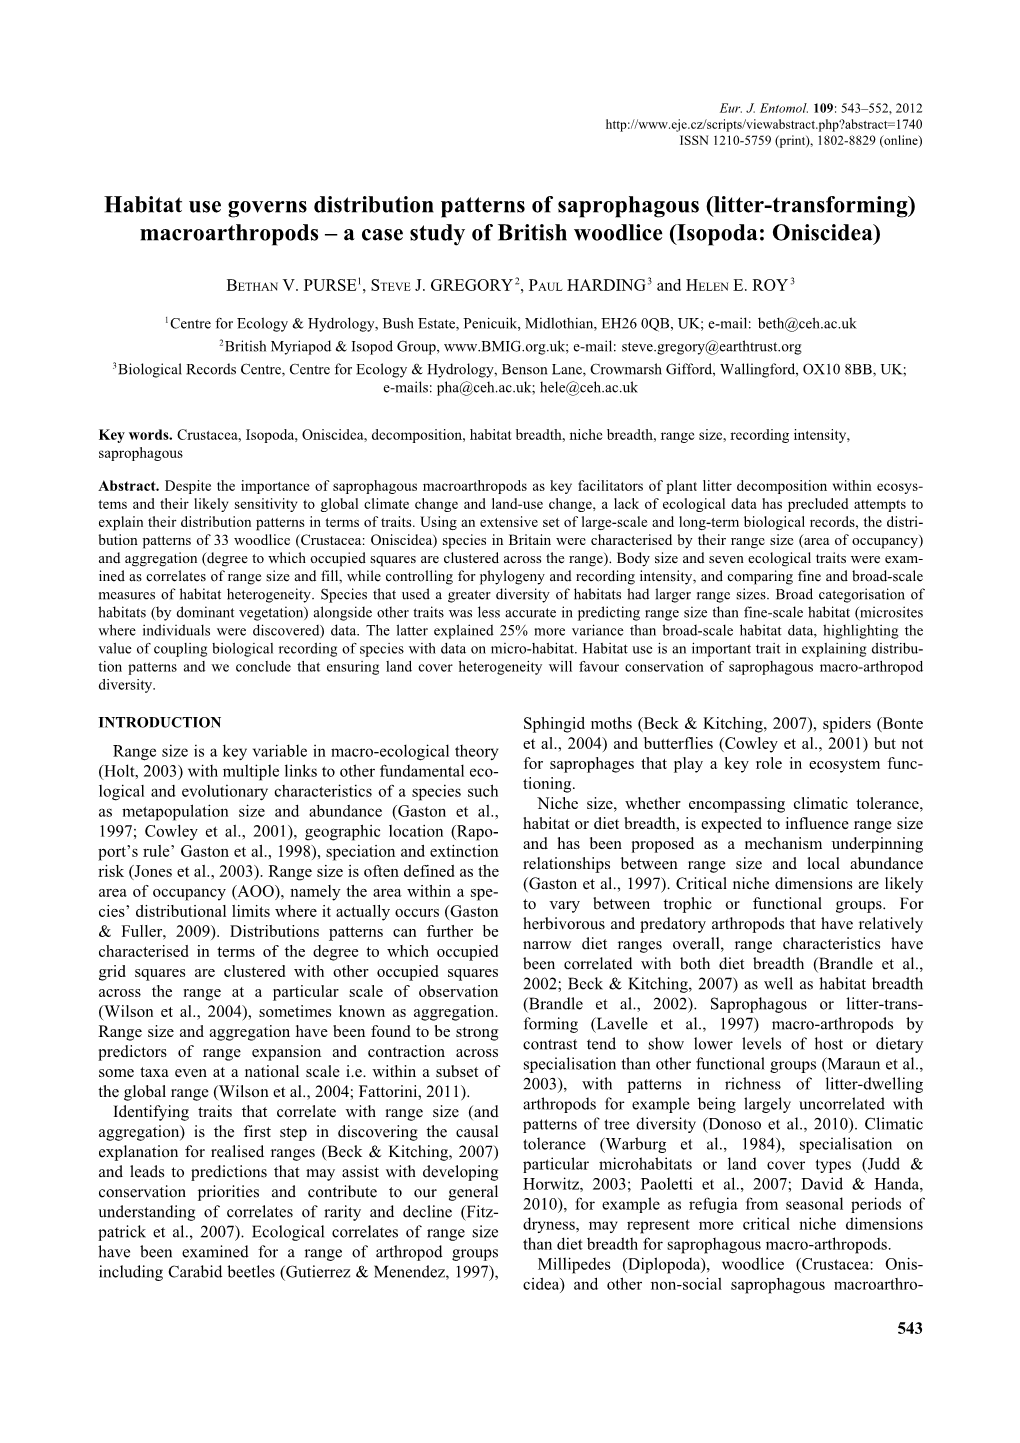 Habitat Use Governs Distribution Patterns of Saprophagous (Litter-Transforming) Macroarthropods – a Case Study of British Woodlice (Isopoda: Oniscidea)